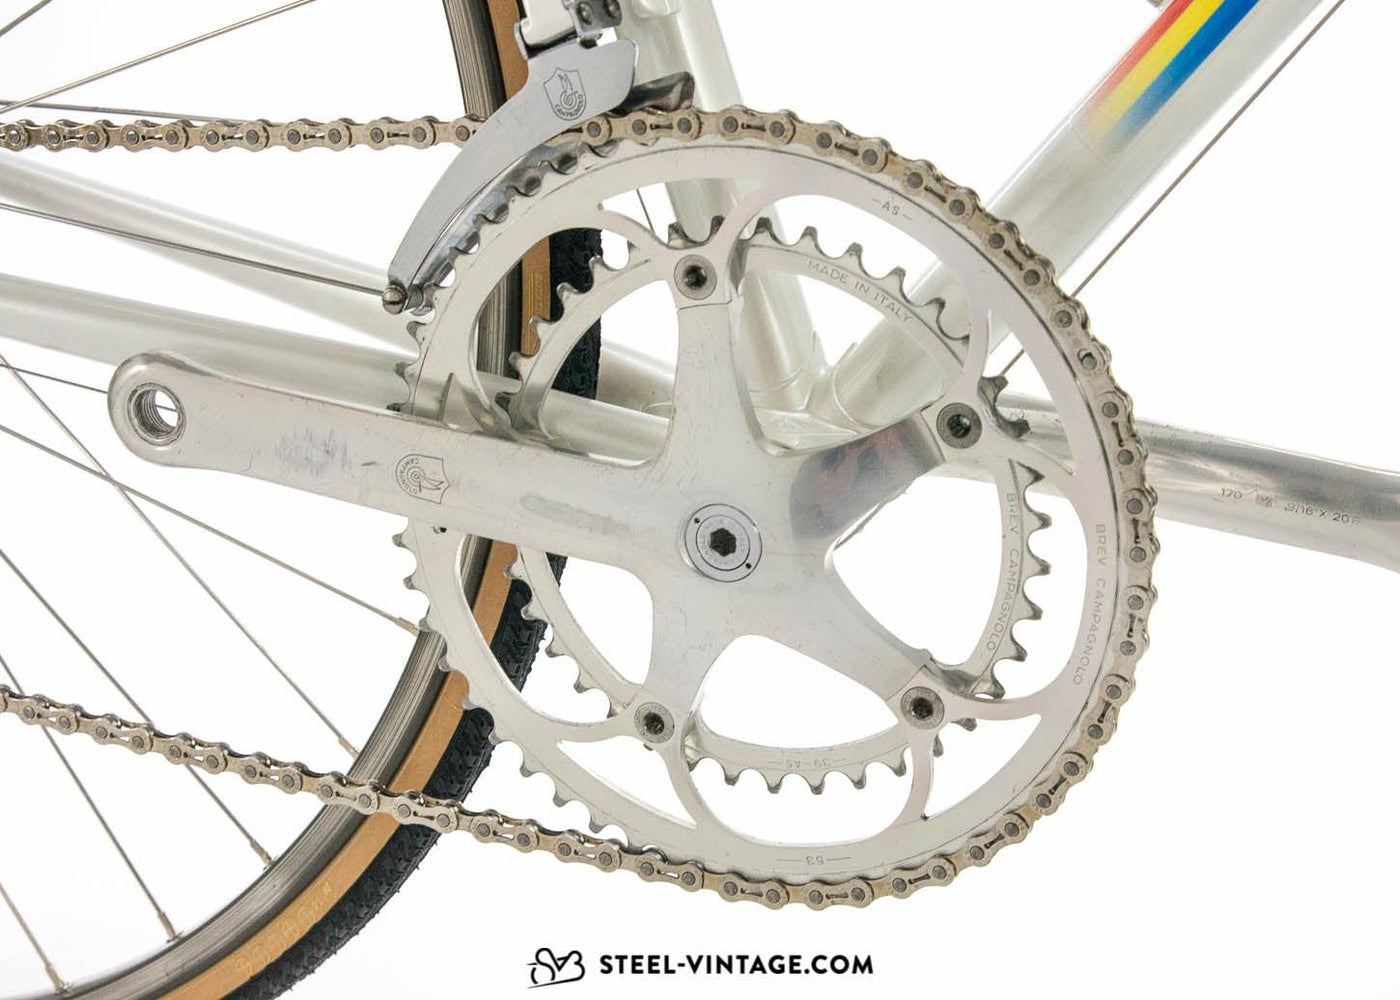 Pinarello Giro Vintage Racing Bike - Steel Vintage Bikes